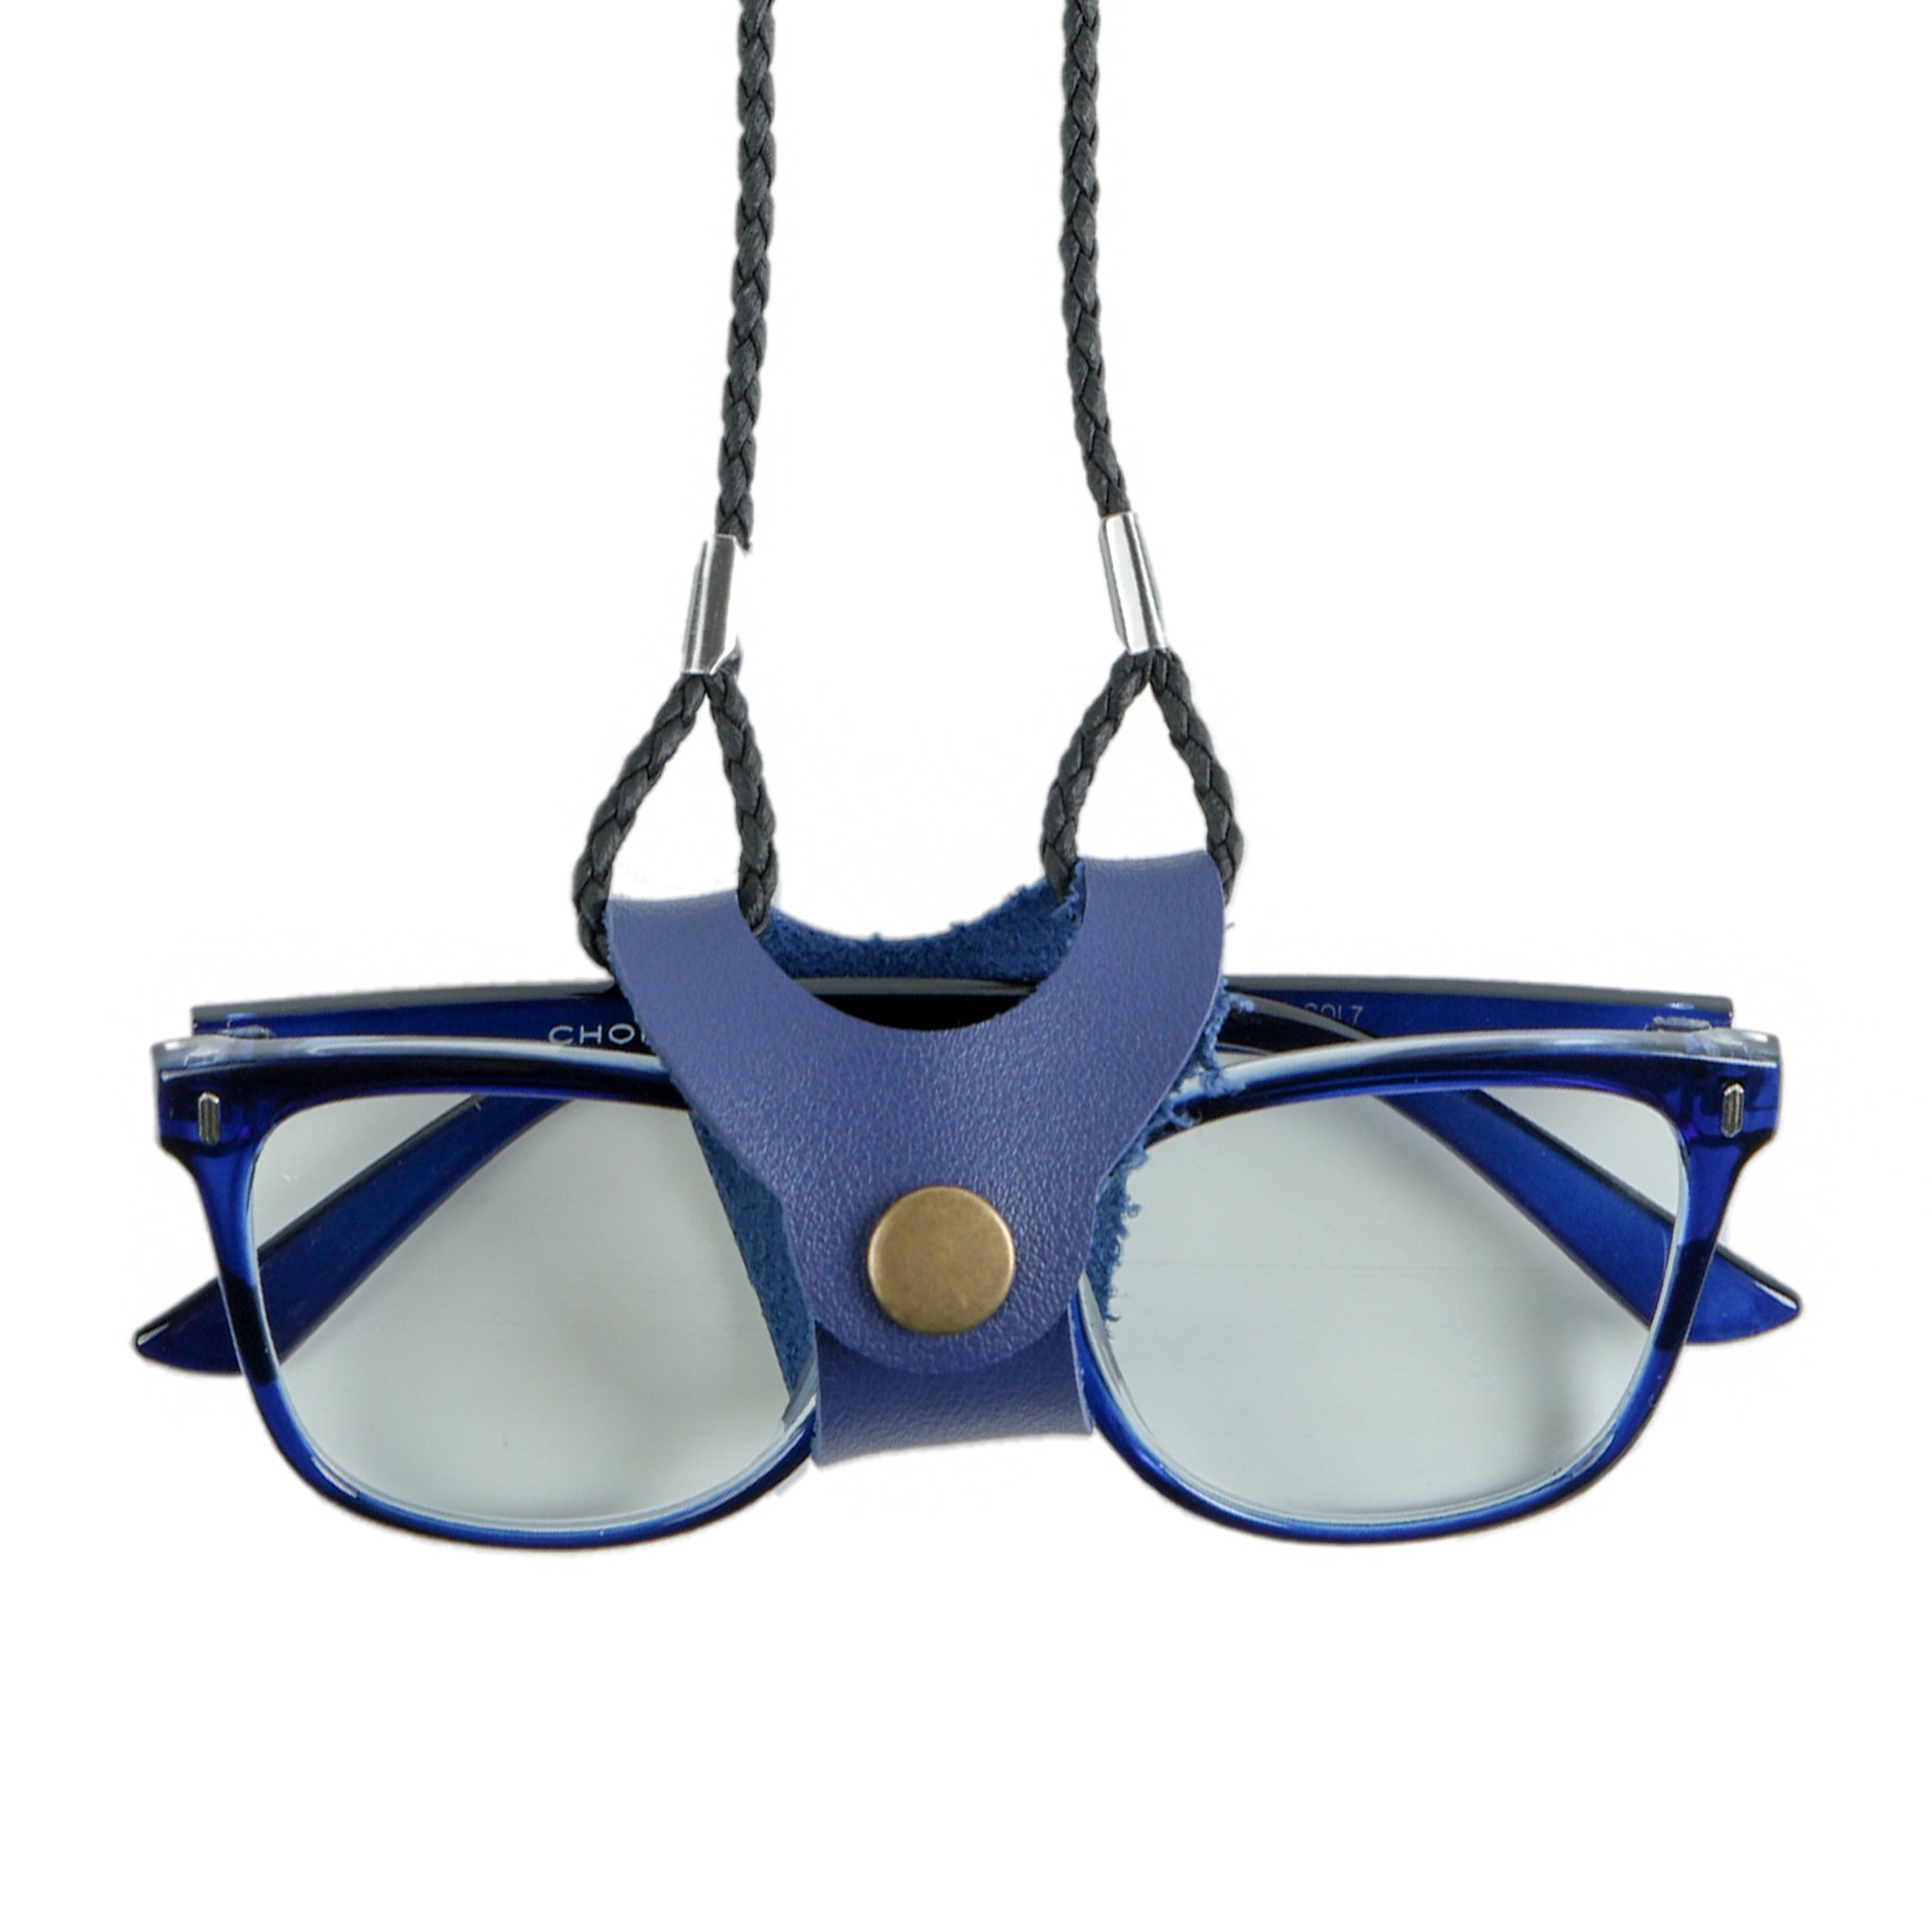 Chokore Leather Braided Eyeglass Cord/String (Blue)